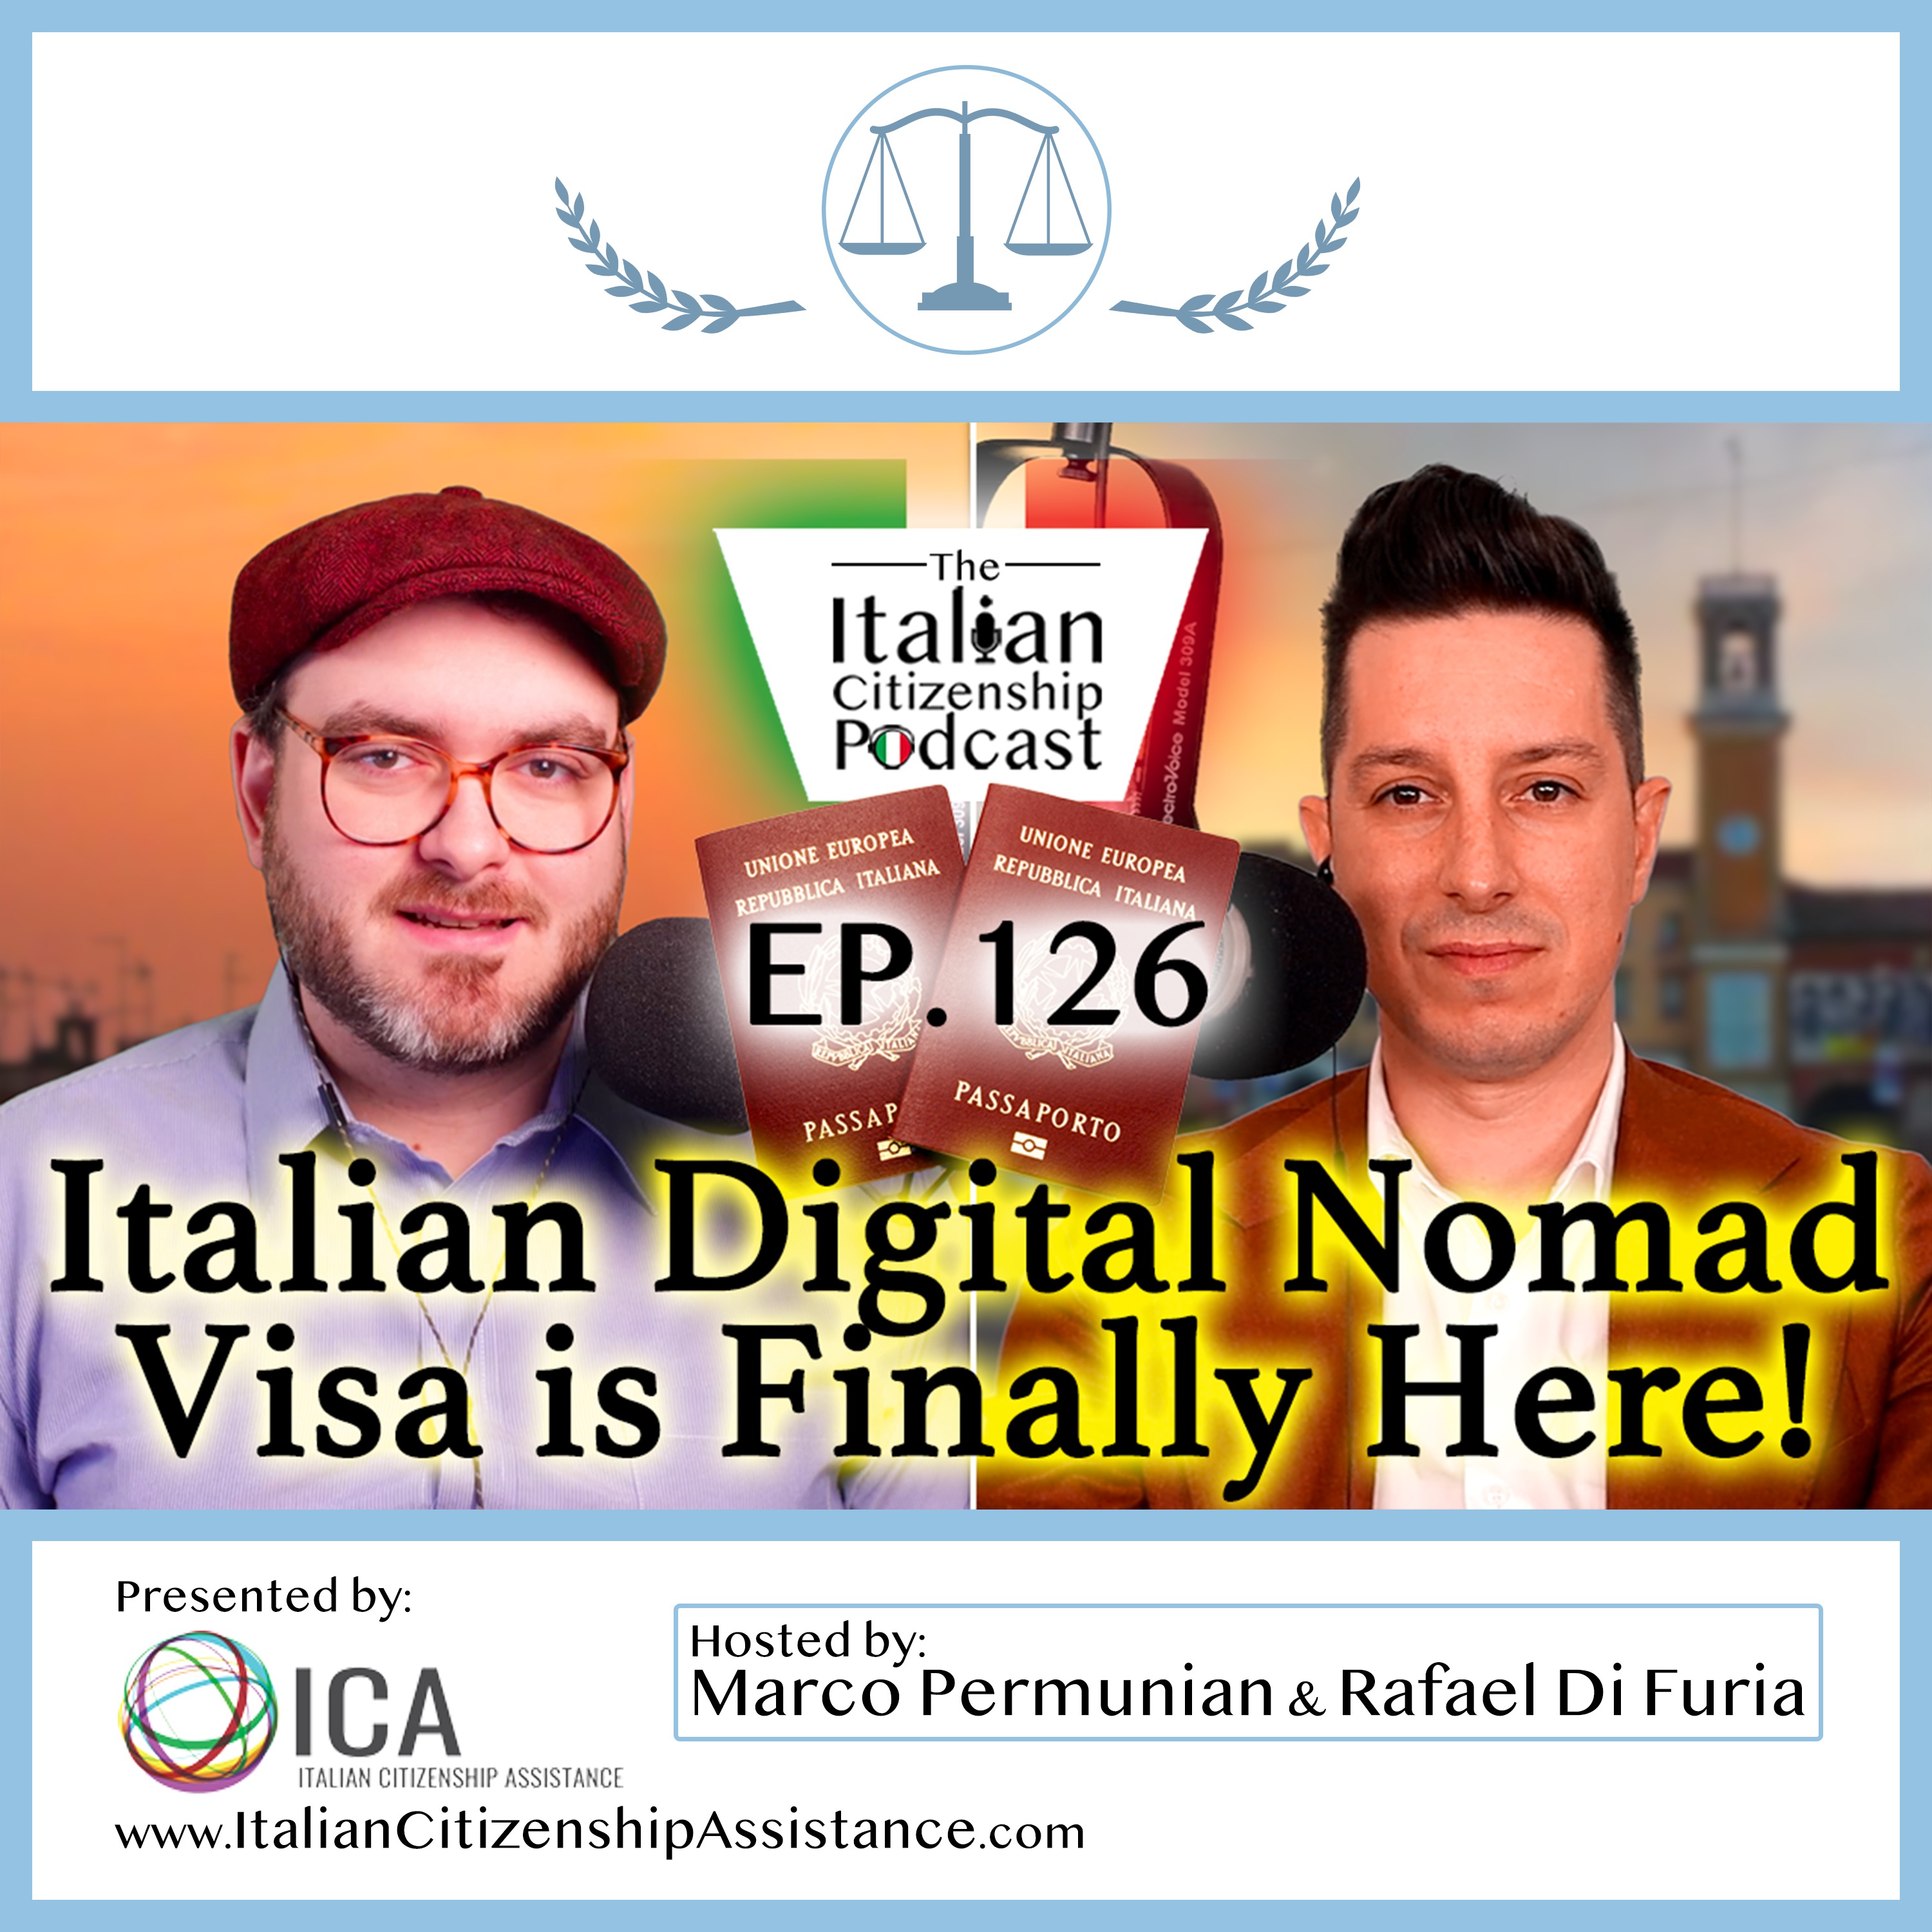 The Italian Digital Nomad Visa is Finally Here!